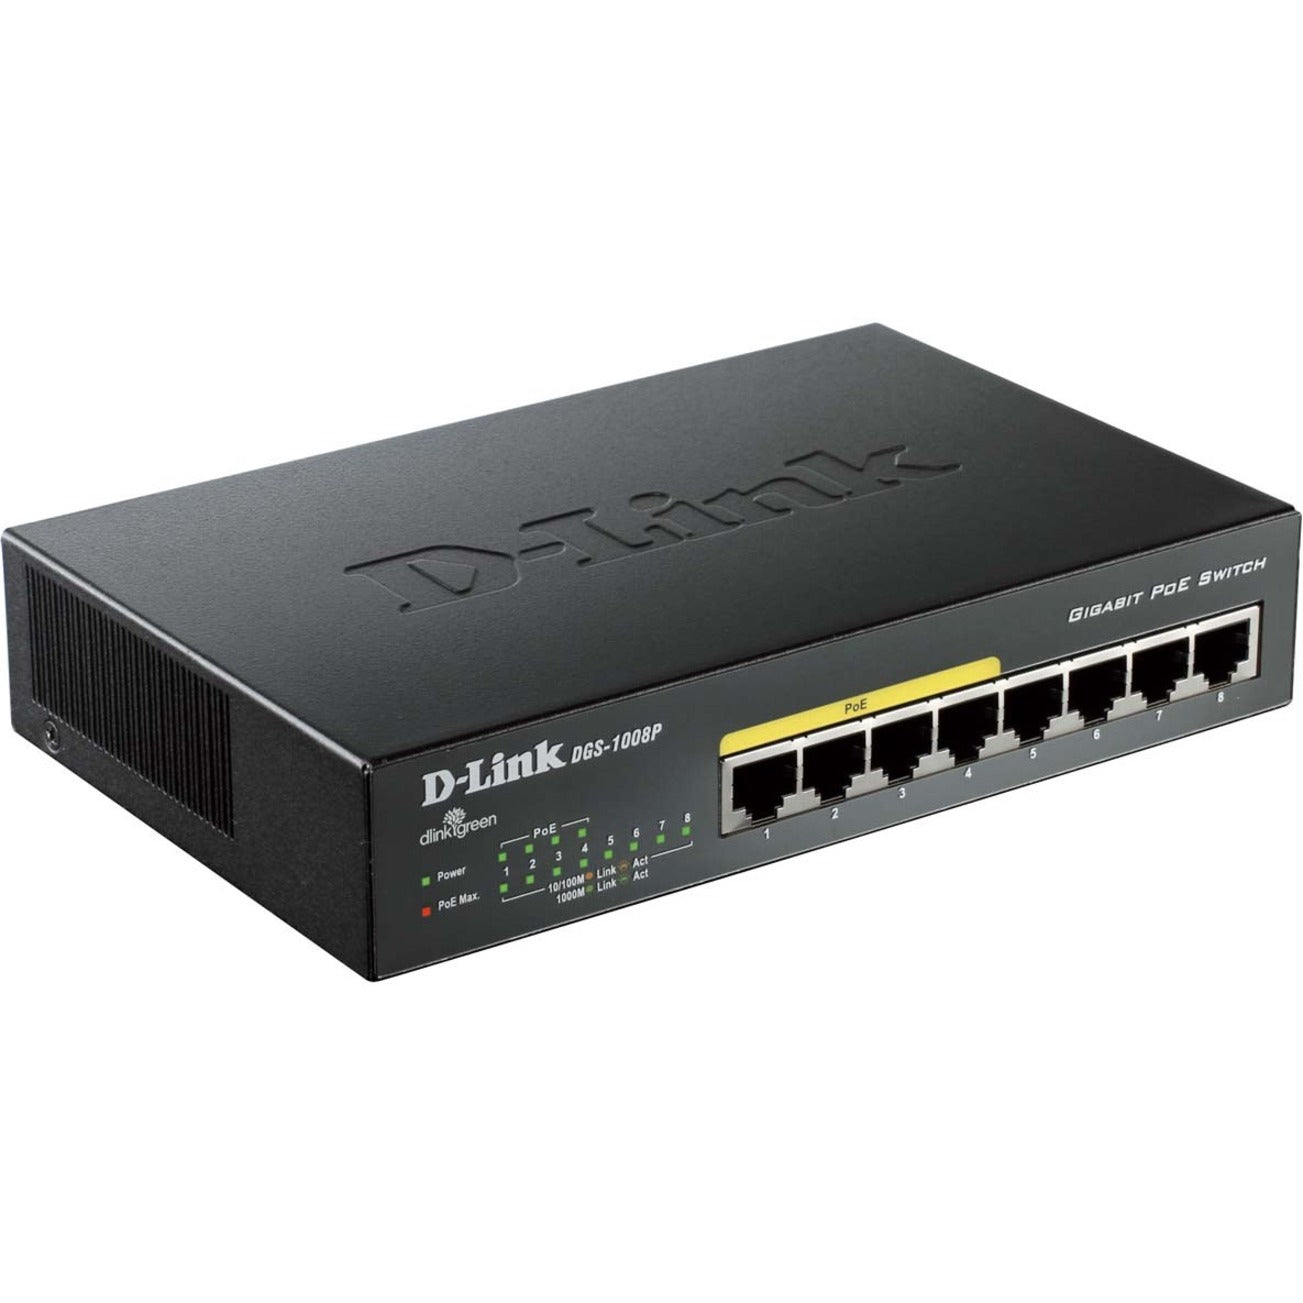 D-Link DGS-1008P Ethernet Switch, 8-Port Gigabit Metal Desktop Switch with 4 PoE Ports